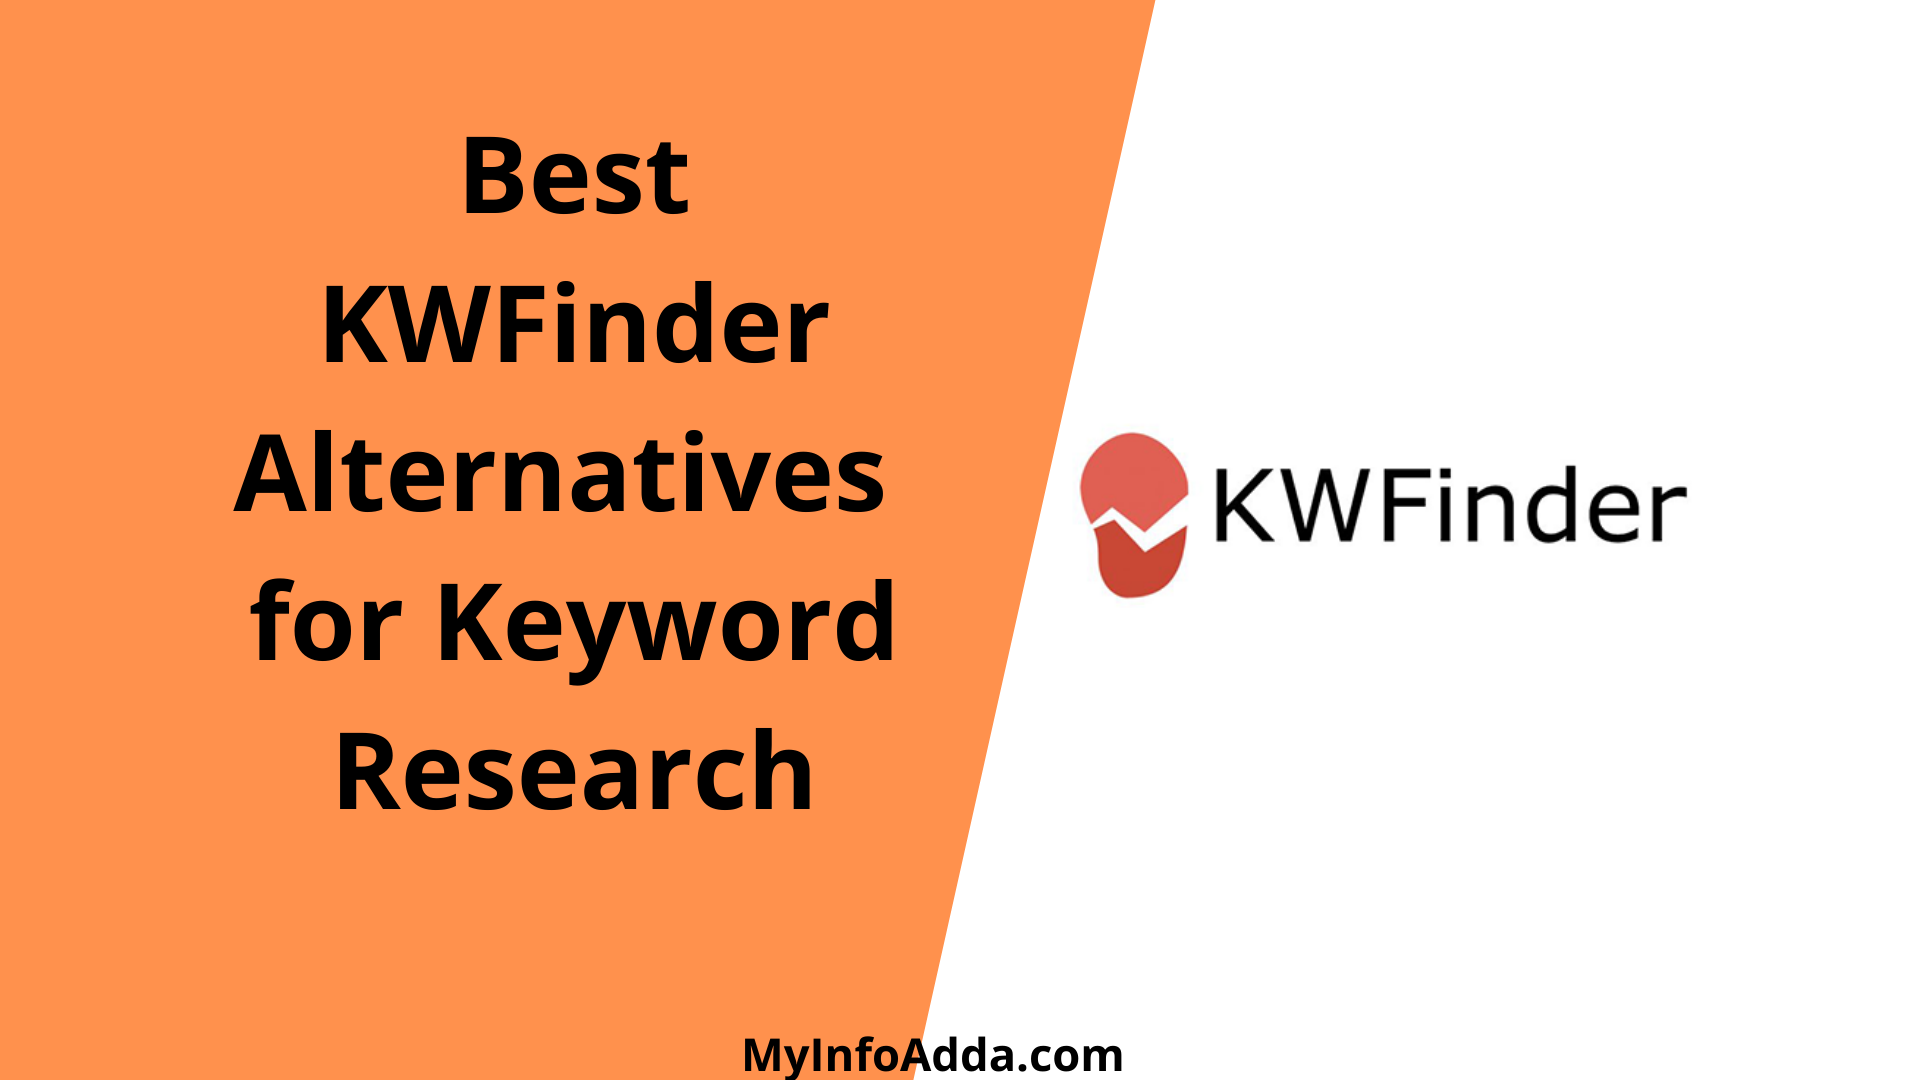 Best KWFinder Alternatives for Keyword Research